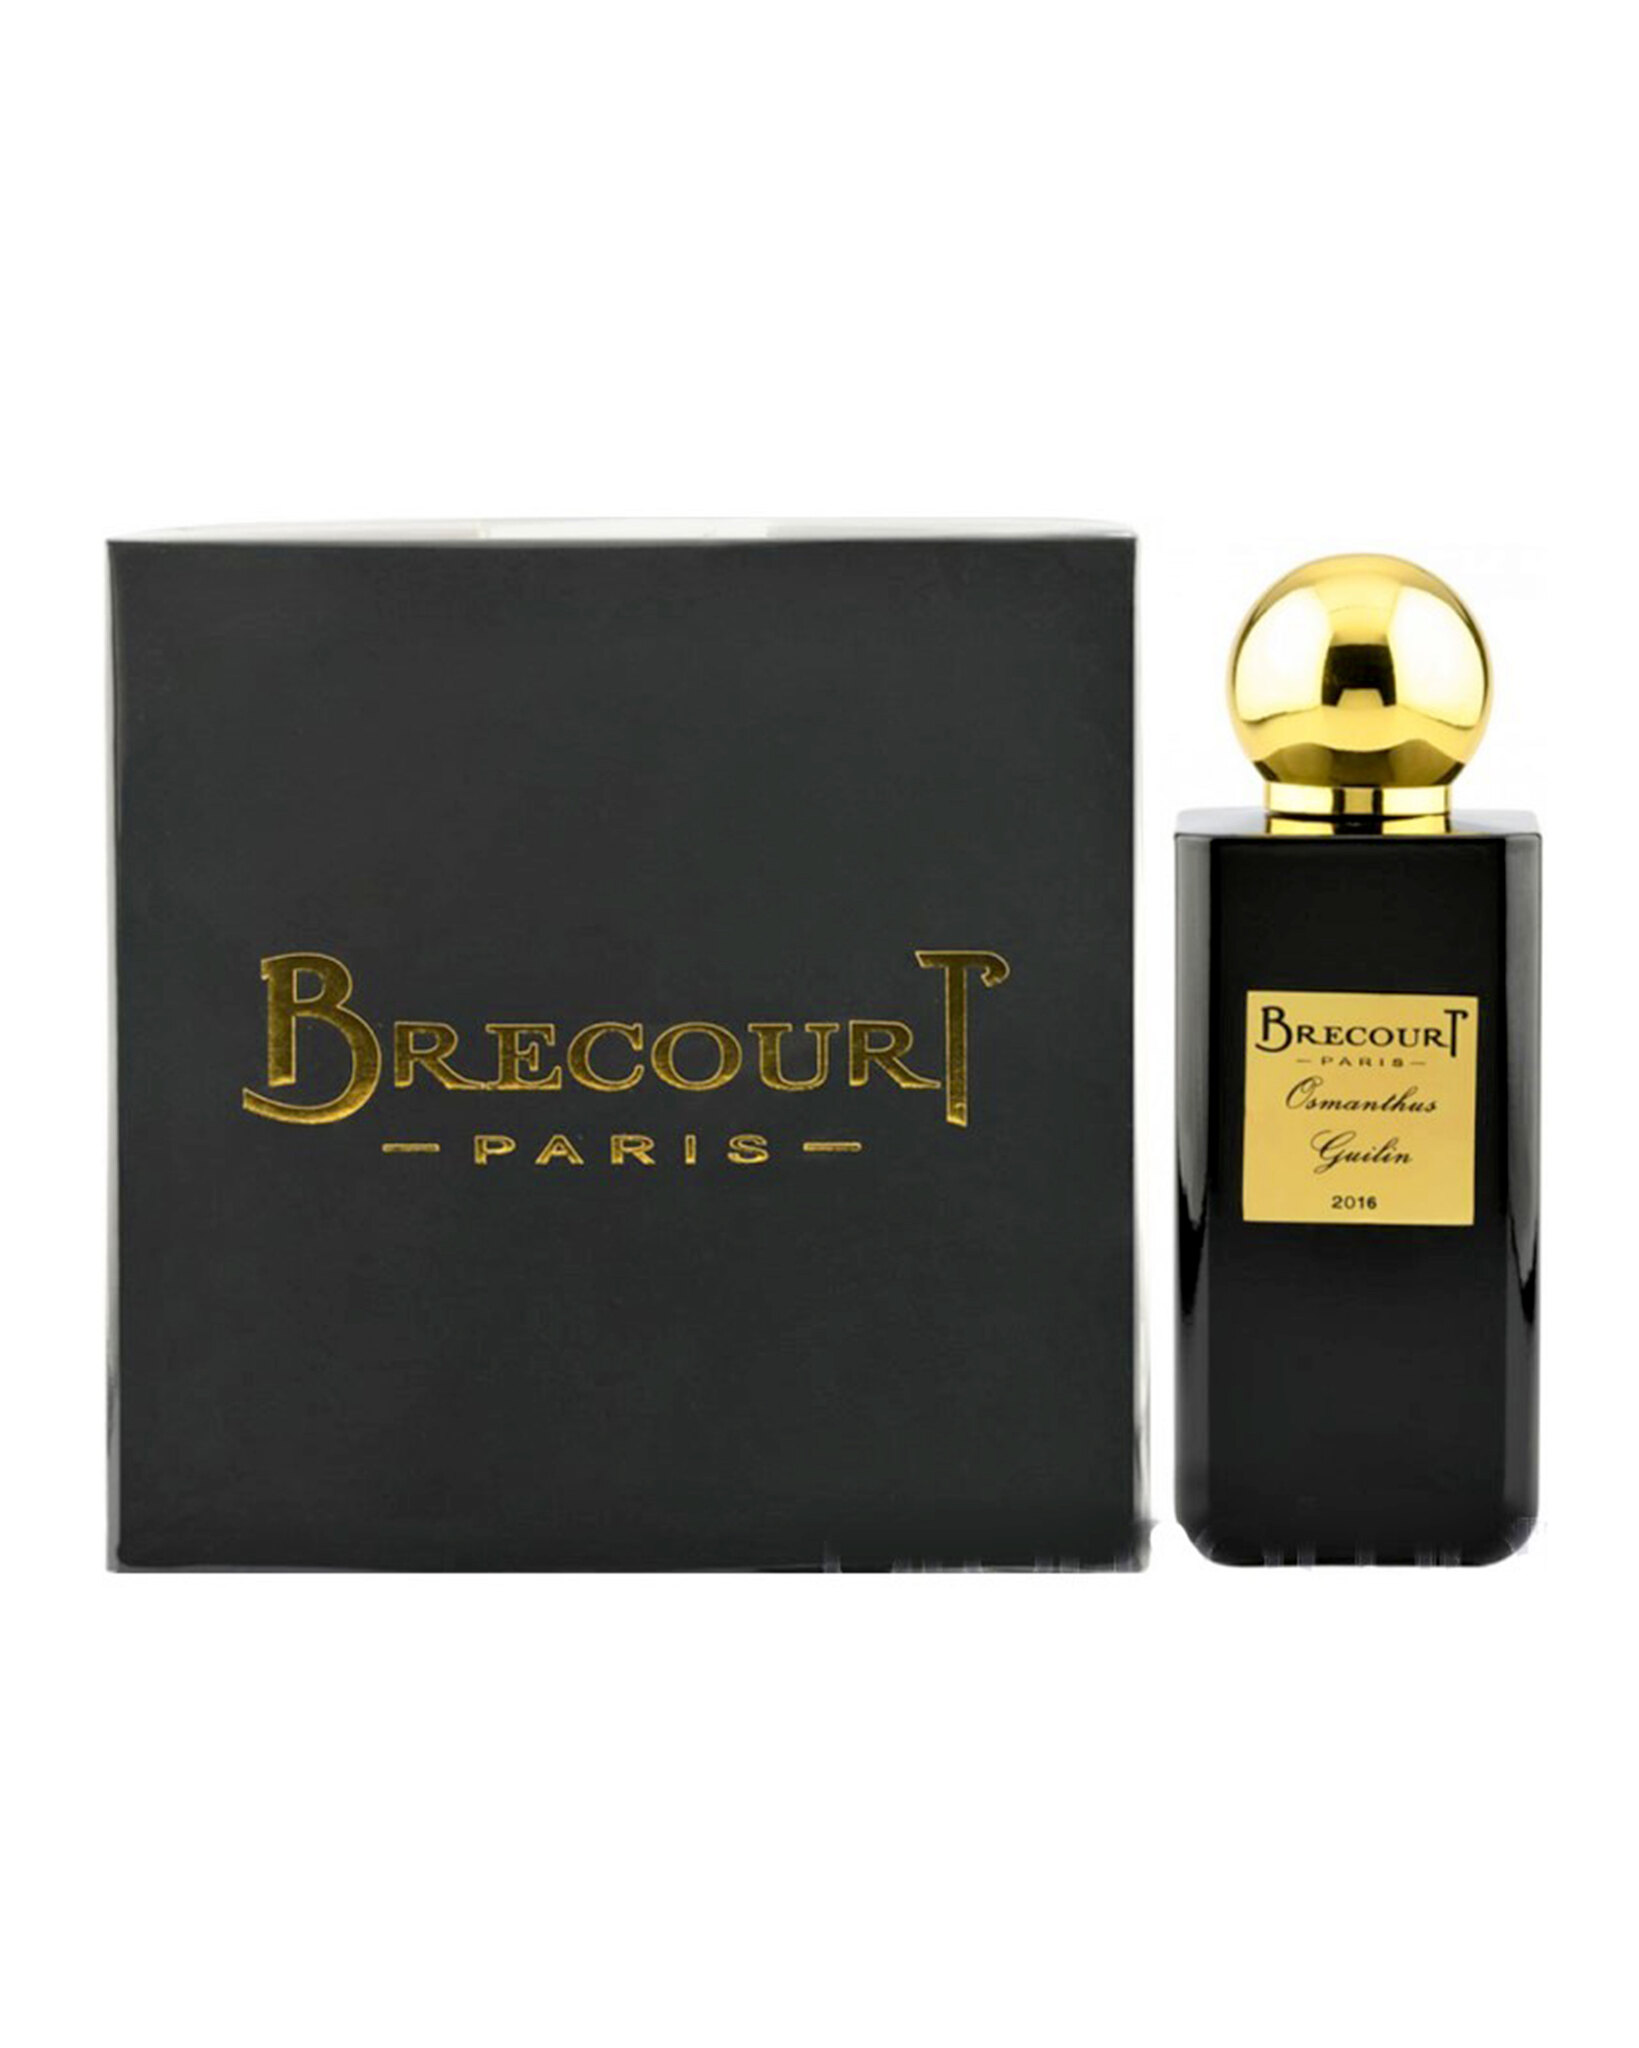 Brecourt osmanthus guilin. Brecourt Captive Парфюм. Brecourt Osmanthus Guilin Perfume. Brecourt Парфюм тонкая.